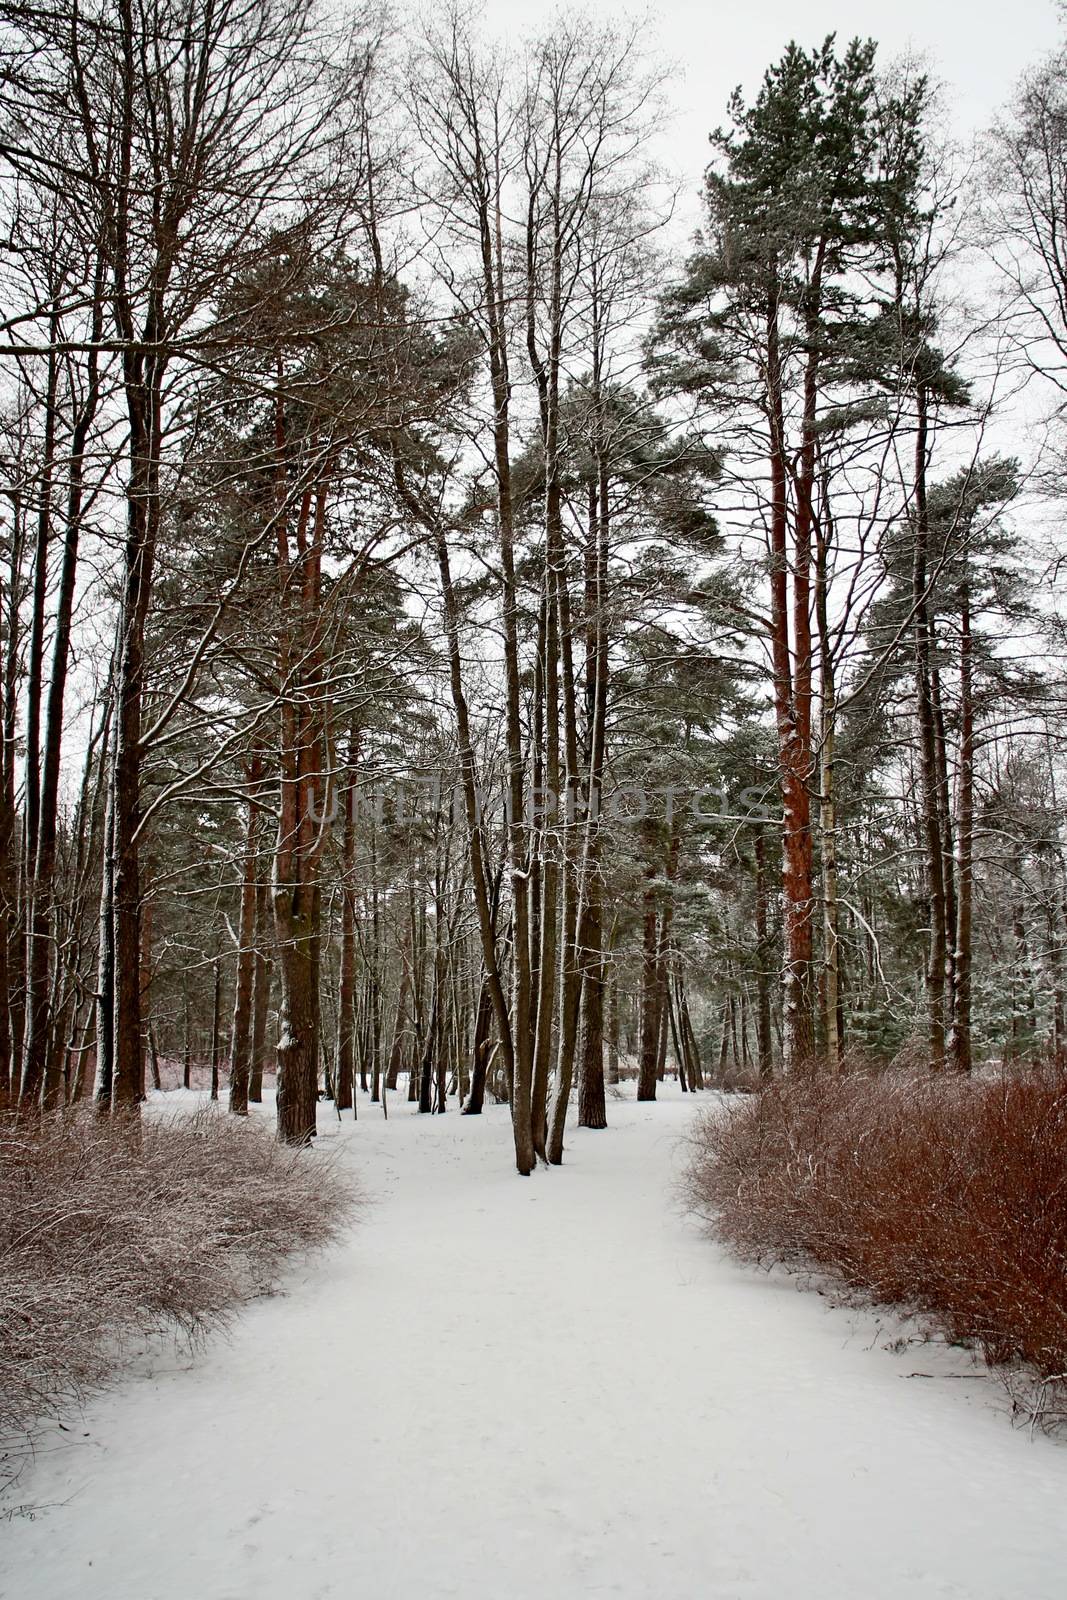 footpath in a snowy park winter landscape